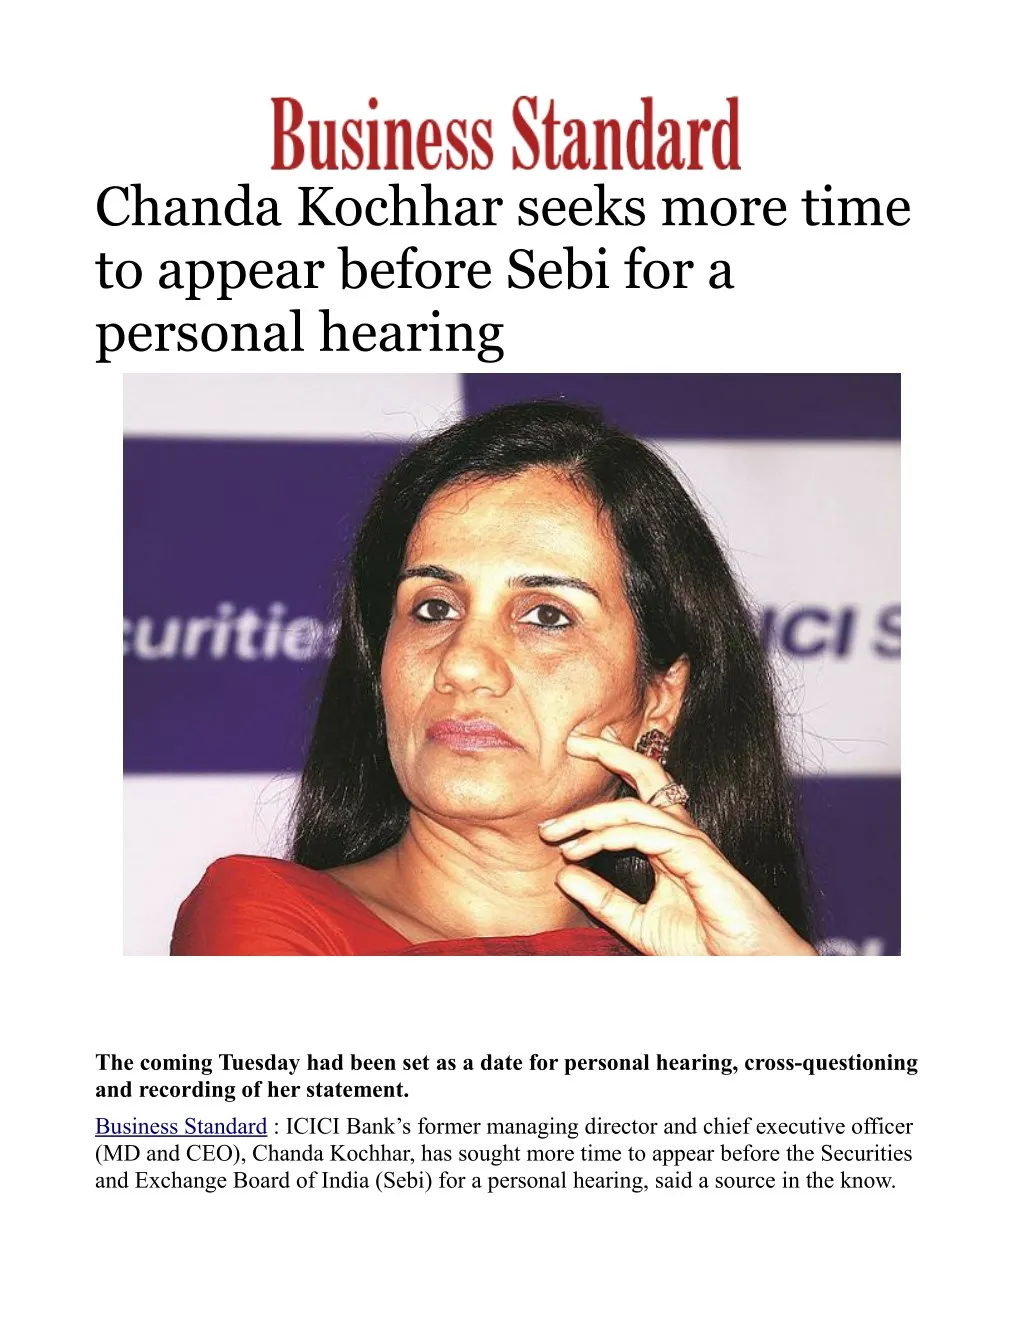 chanda kochhar seeks more time to appear before